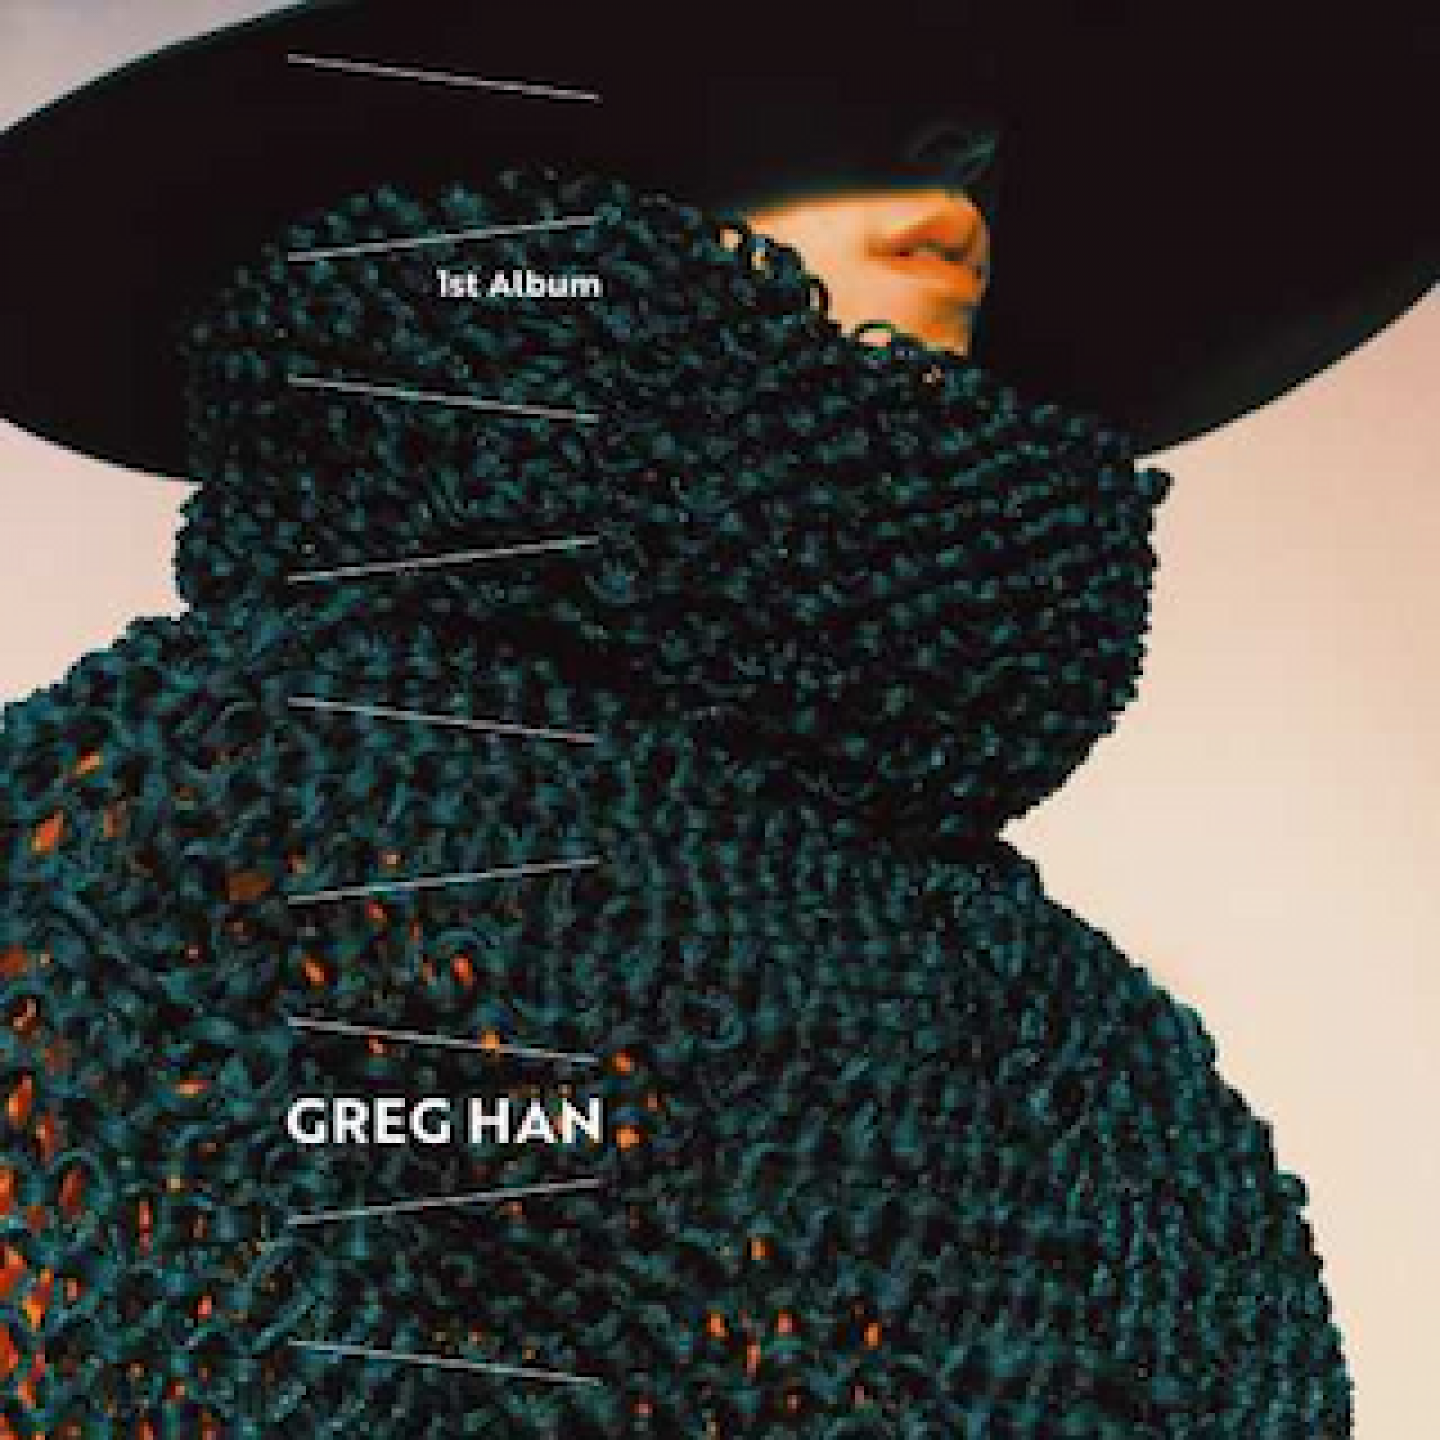 Greg_Han_1st_Album